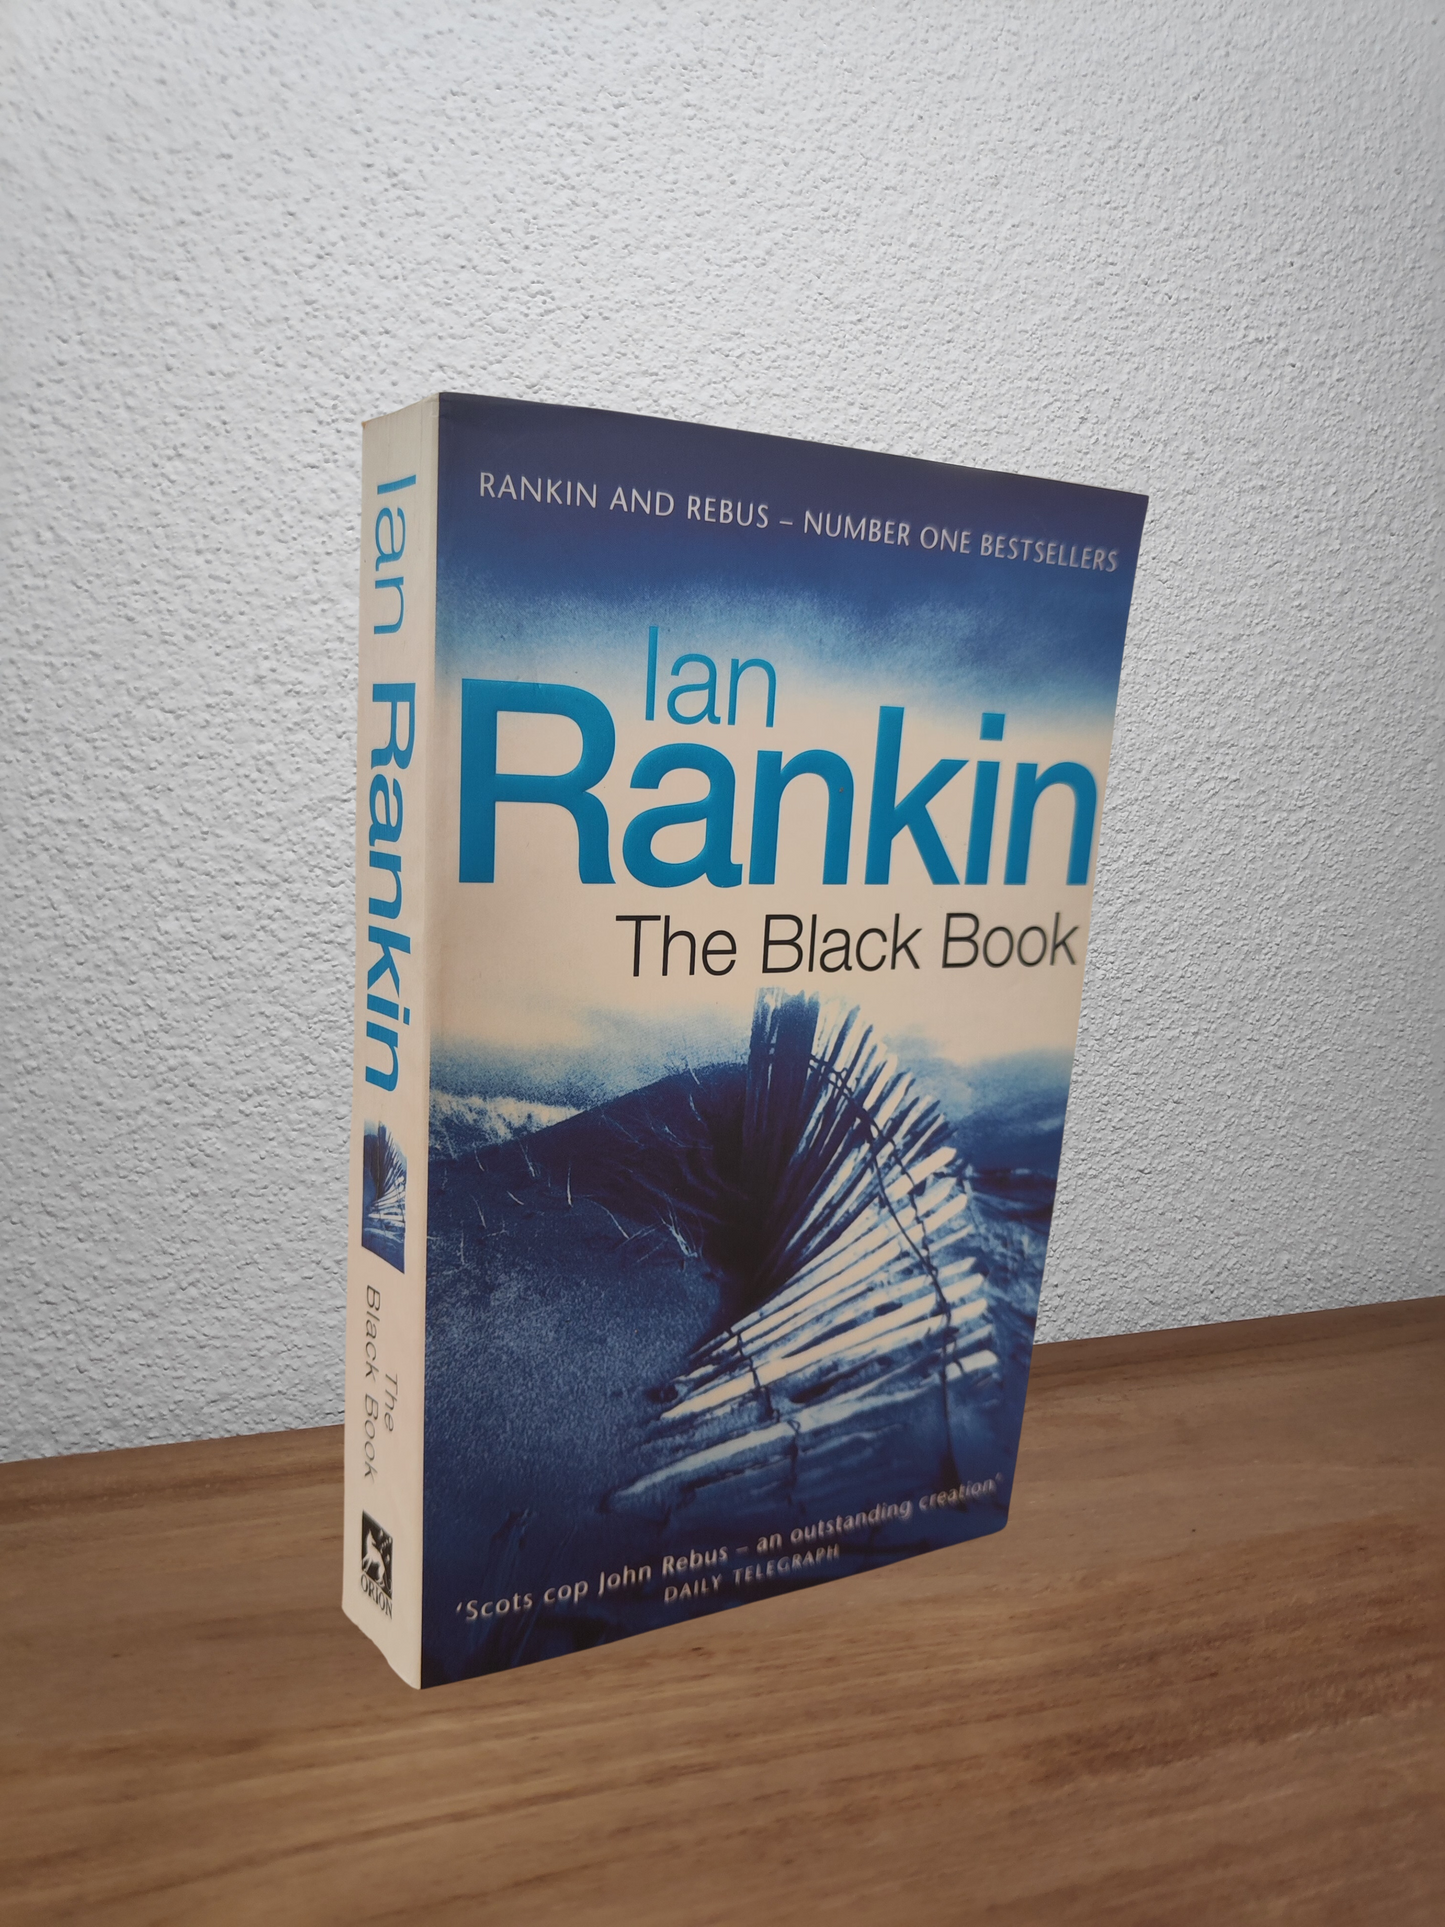 Ian Rankin - The Black Book (Inspector Rebus #5)